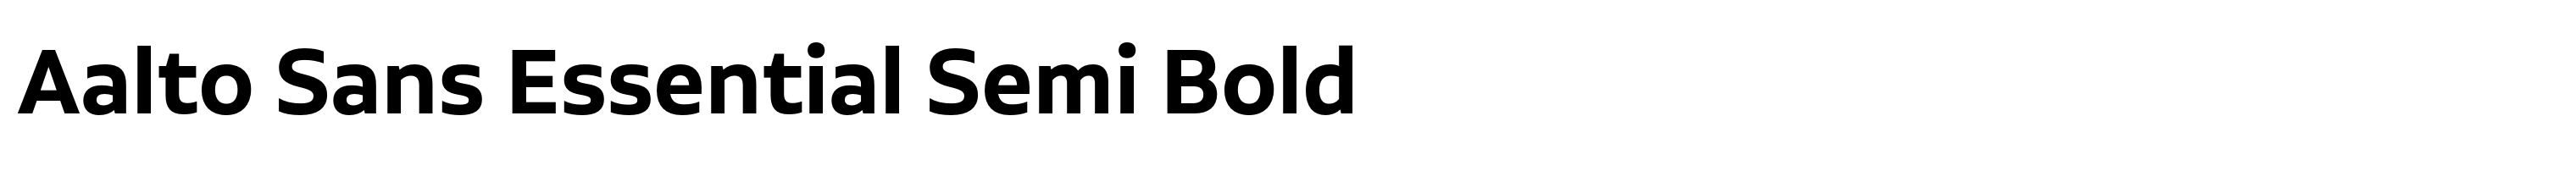 Aalto Sans Essential Semi Bold